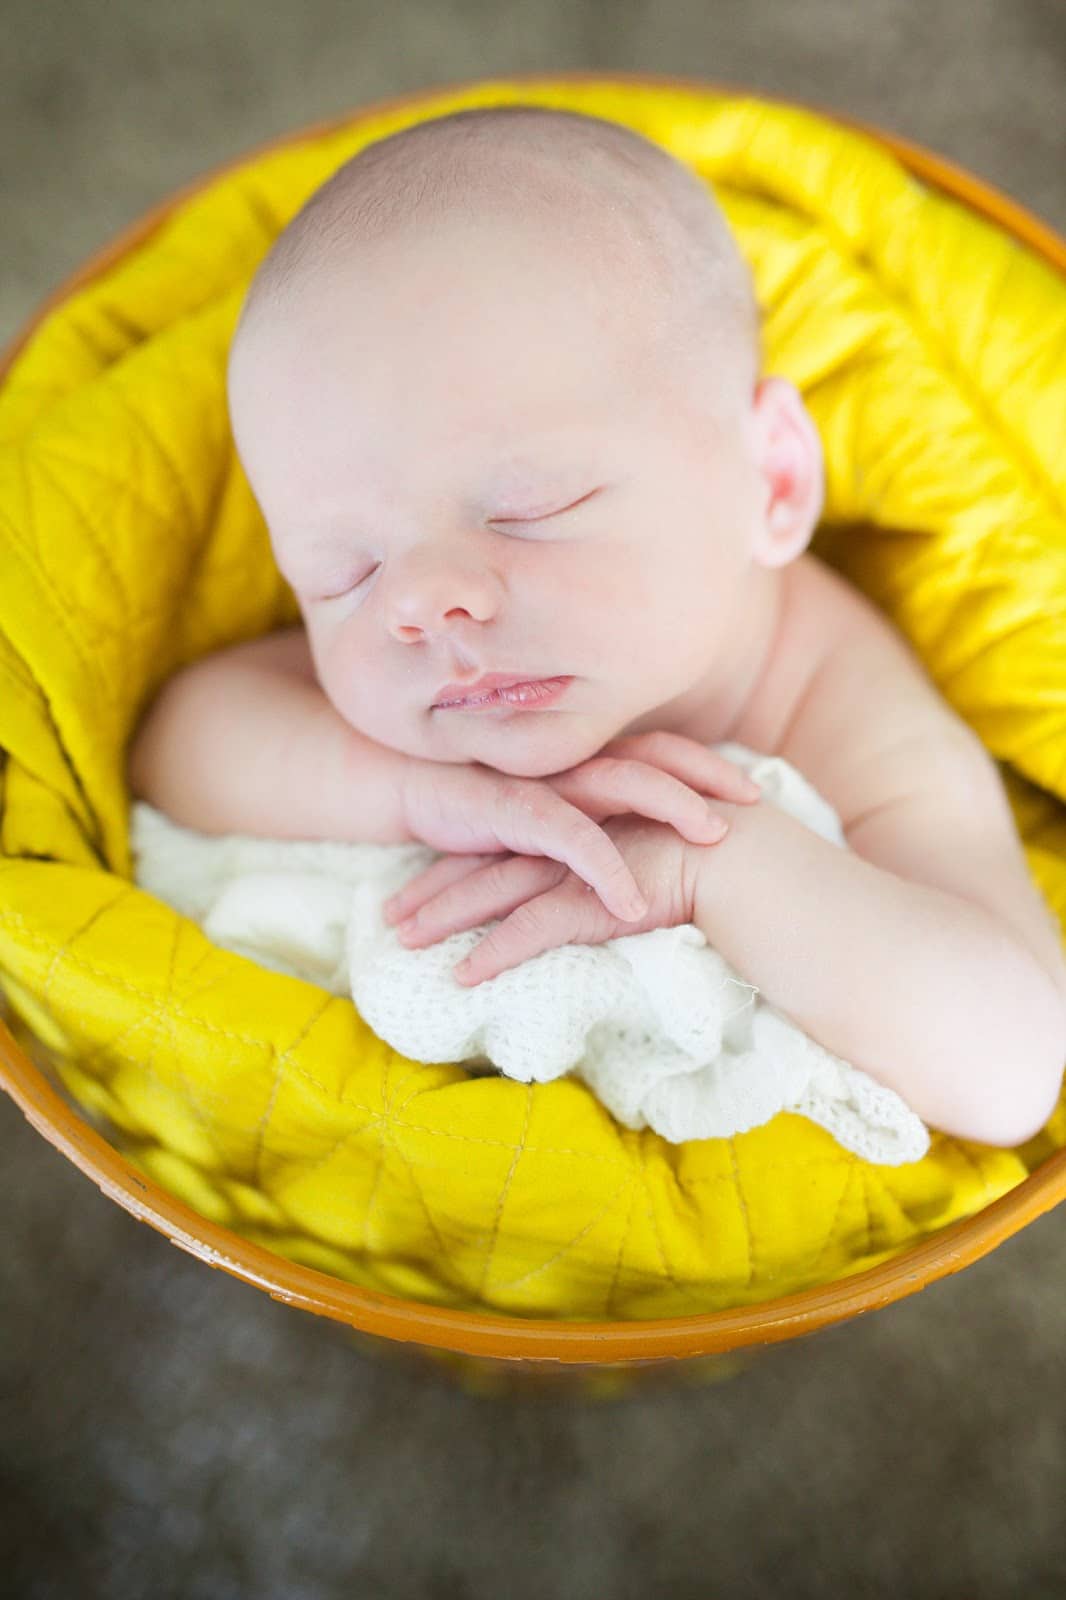 Newborn baby photo shoot ideas: Baby in a basket fast asleep. 